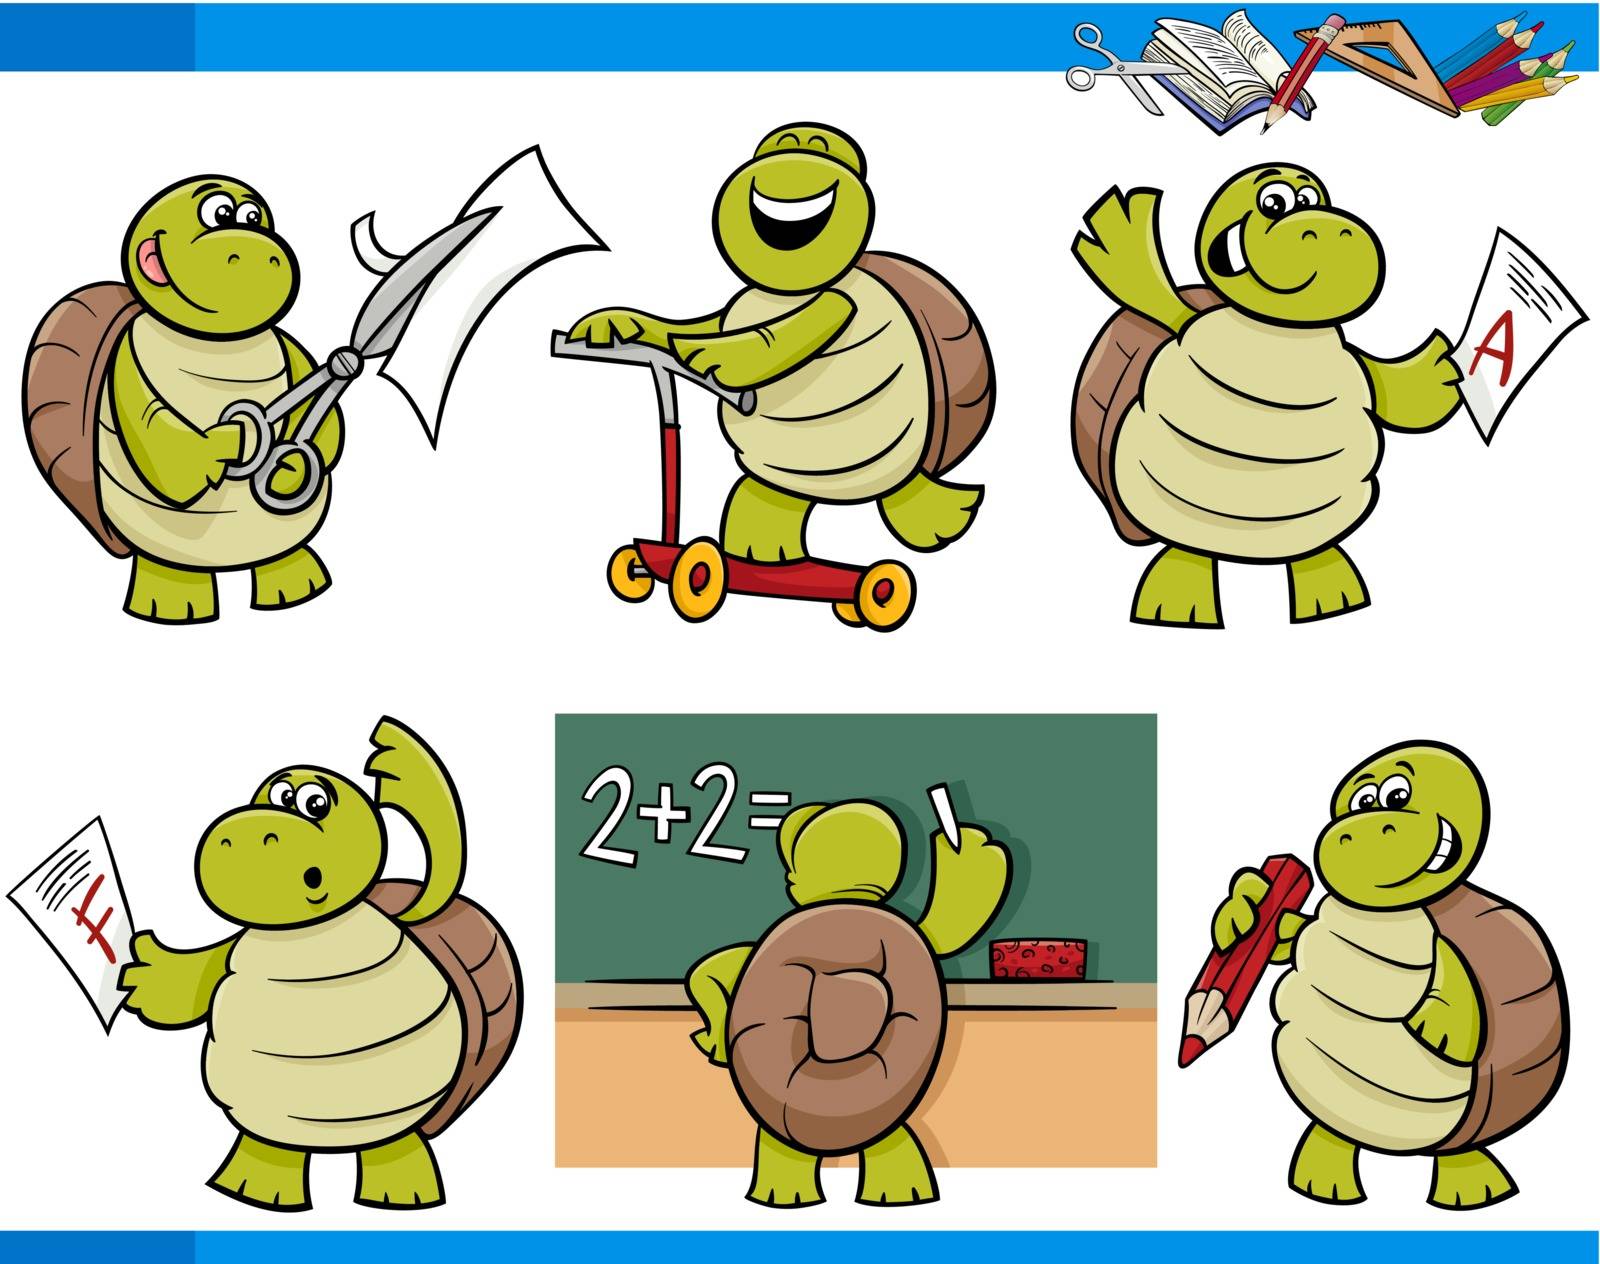 Cartoon Illustration of Turtle Animal Character School Student Set